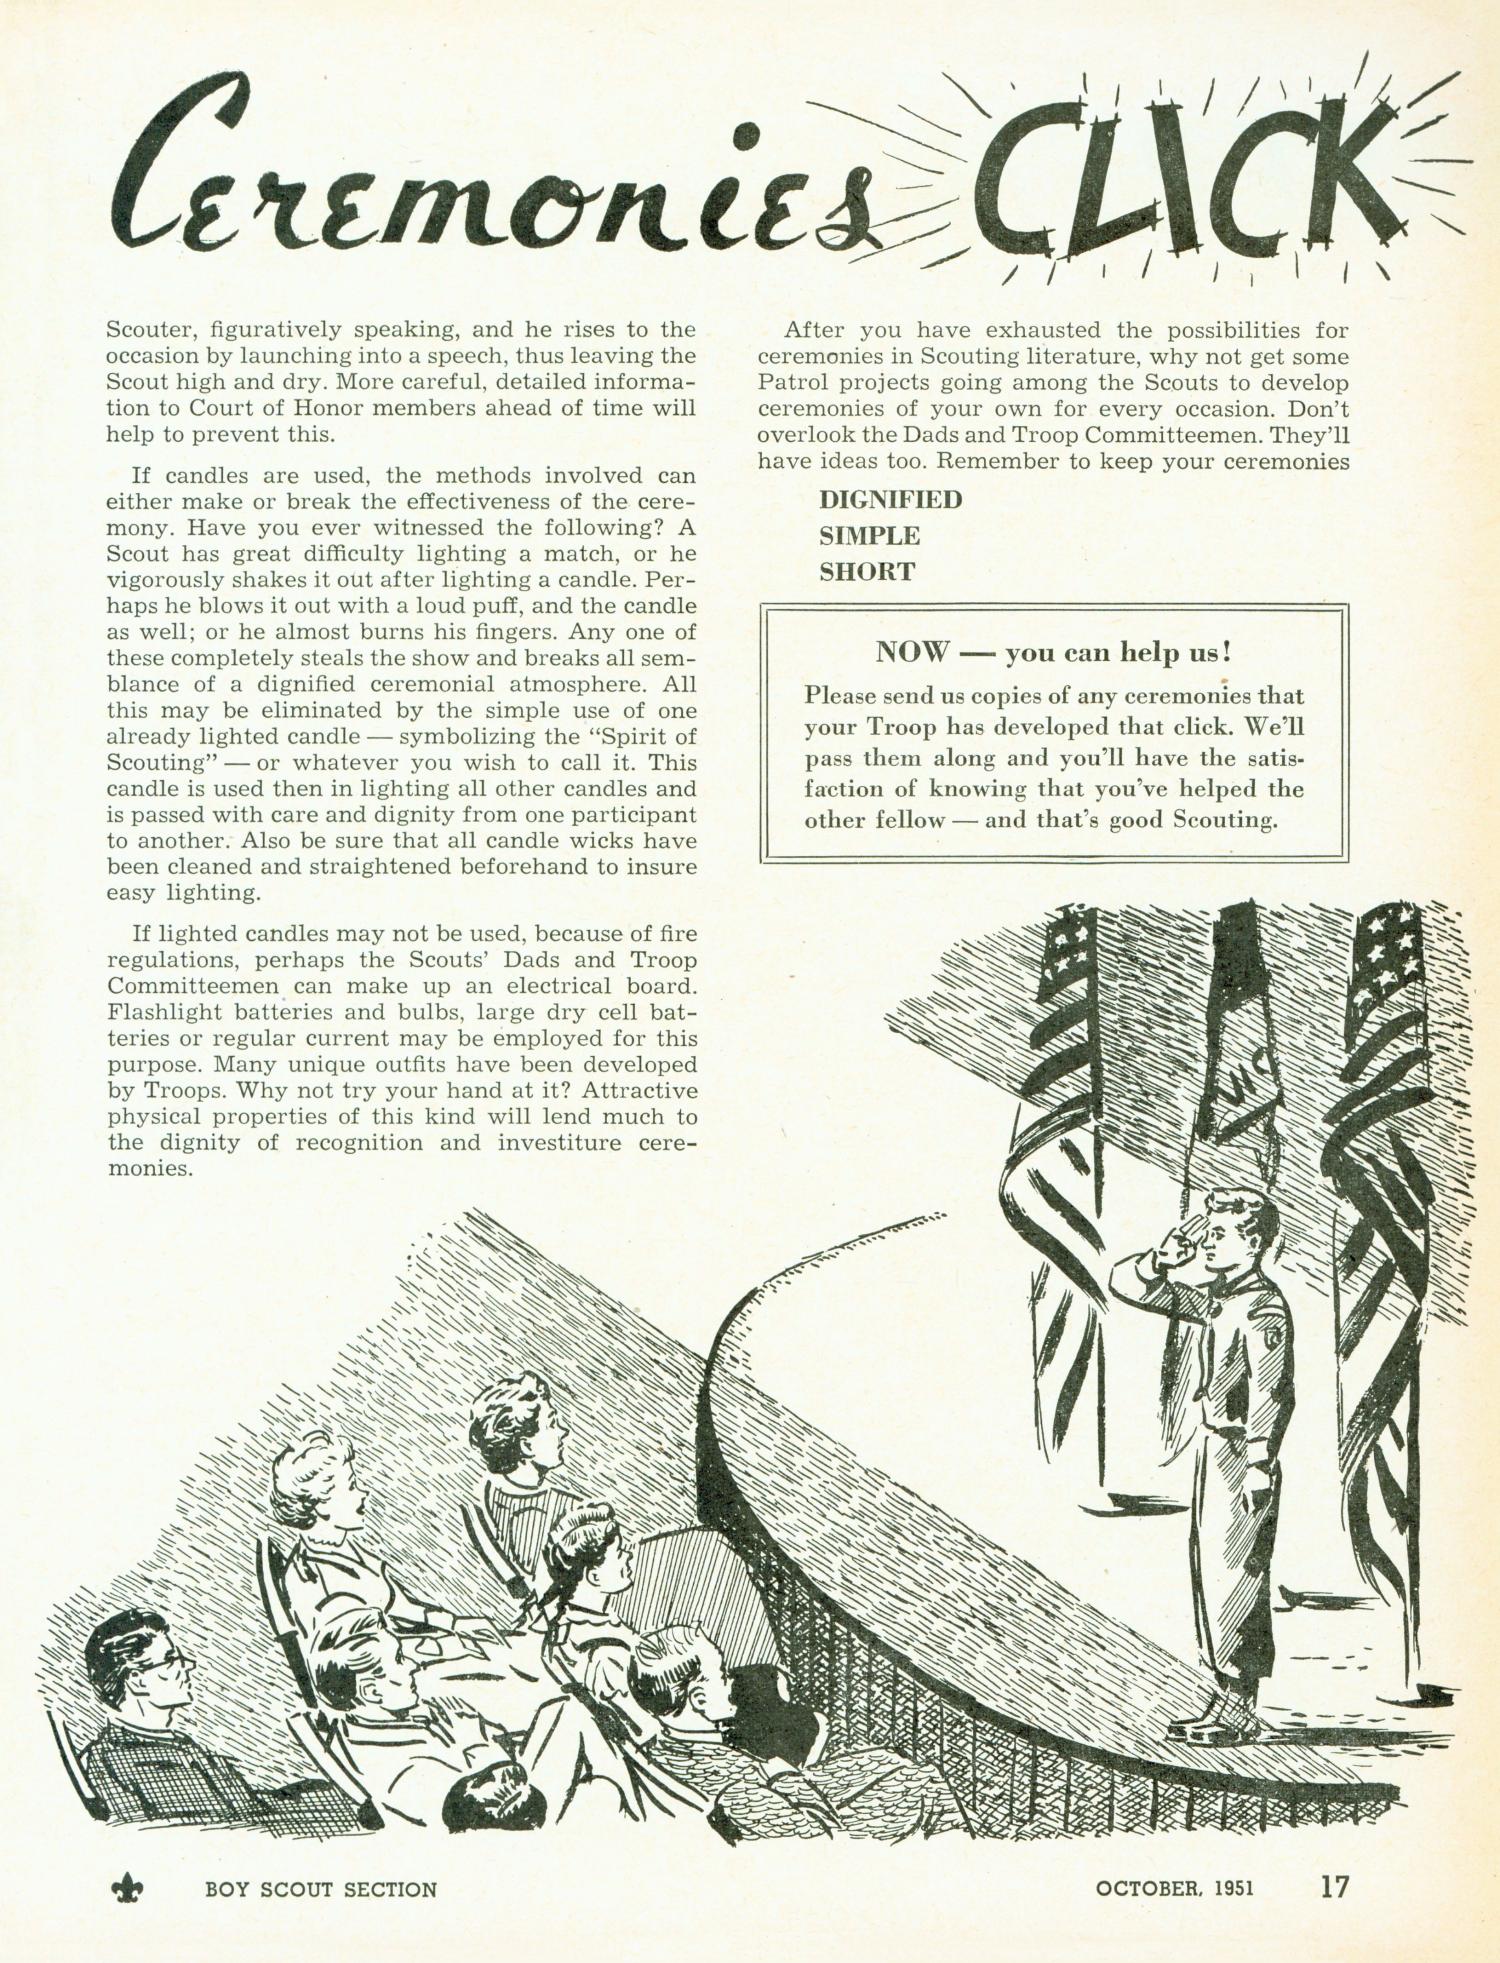 Scouting, Volume 39, Number 8, October 1951
                                                
                                                    17
                                                